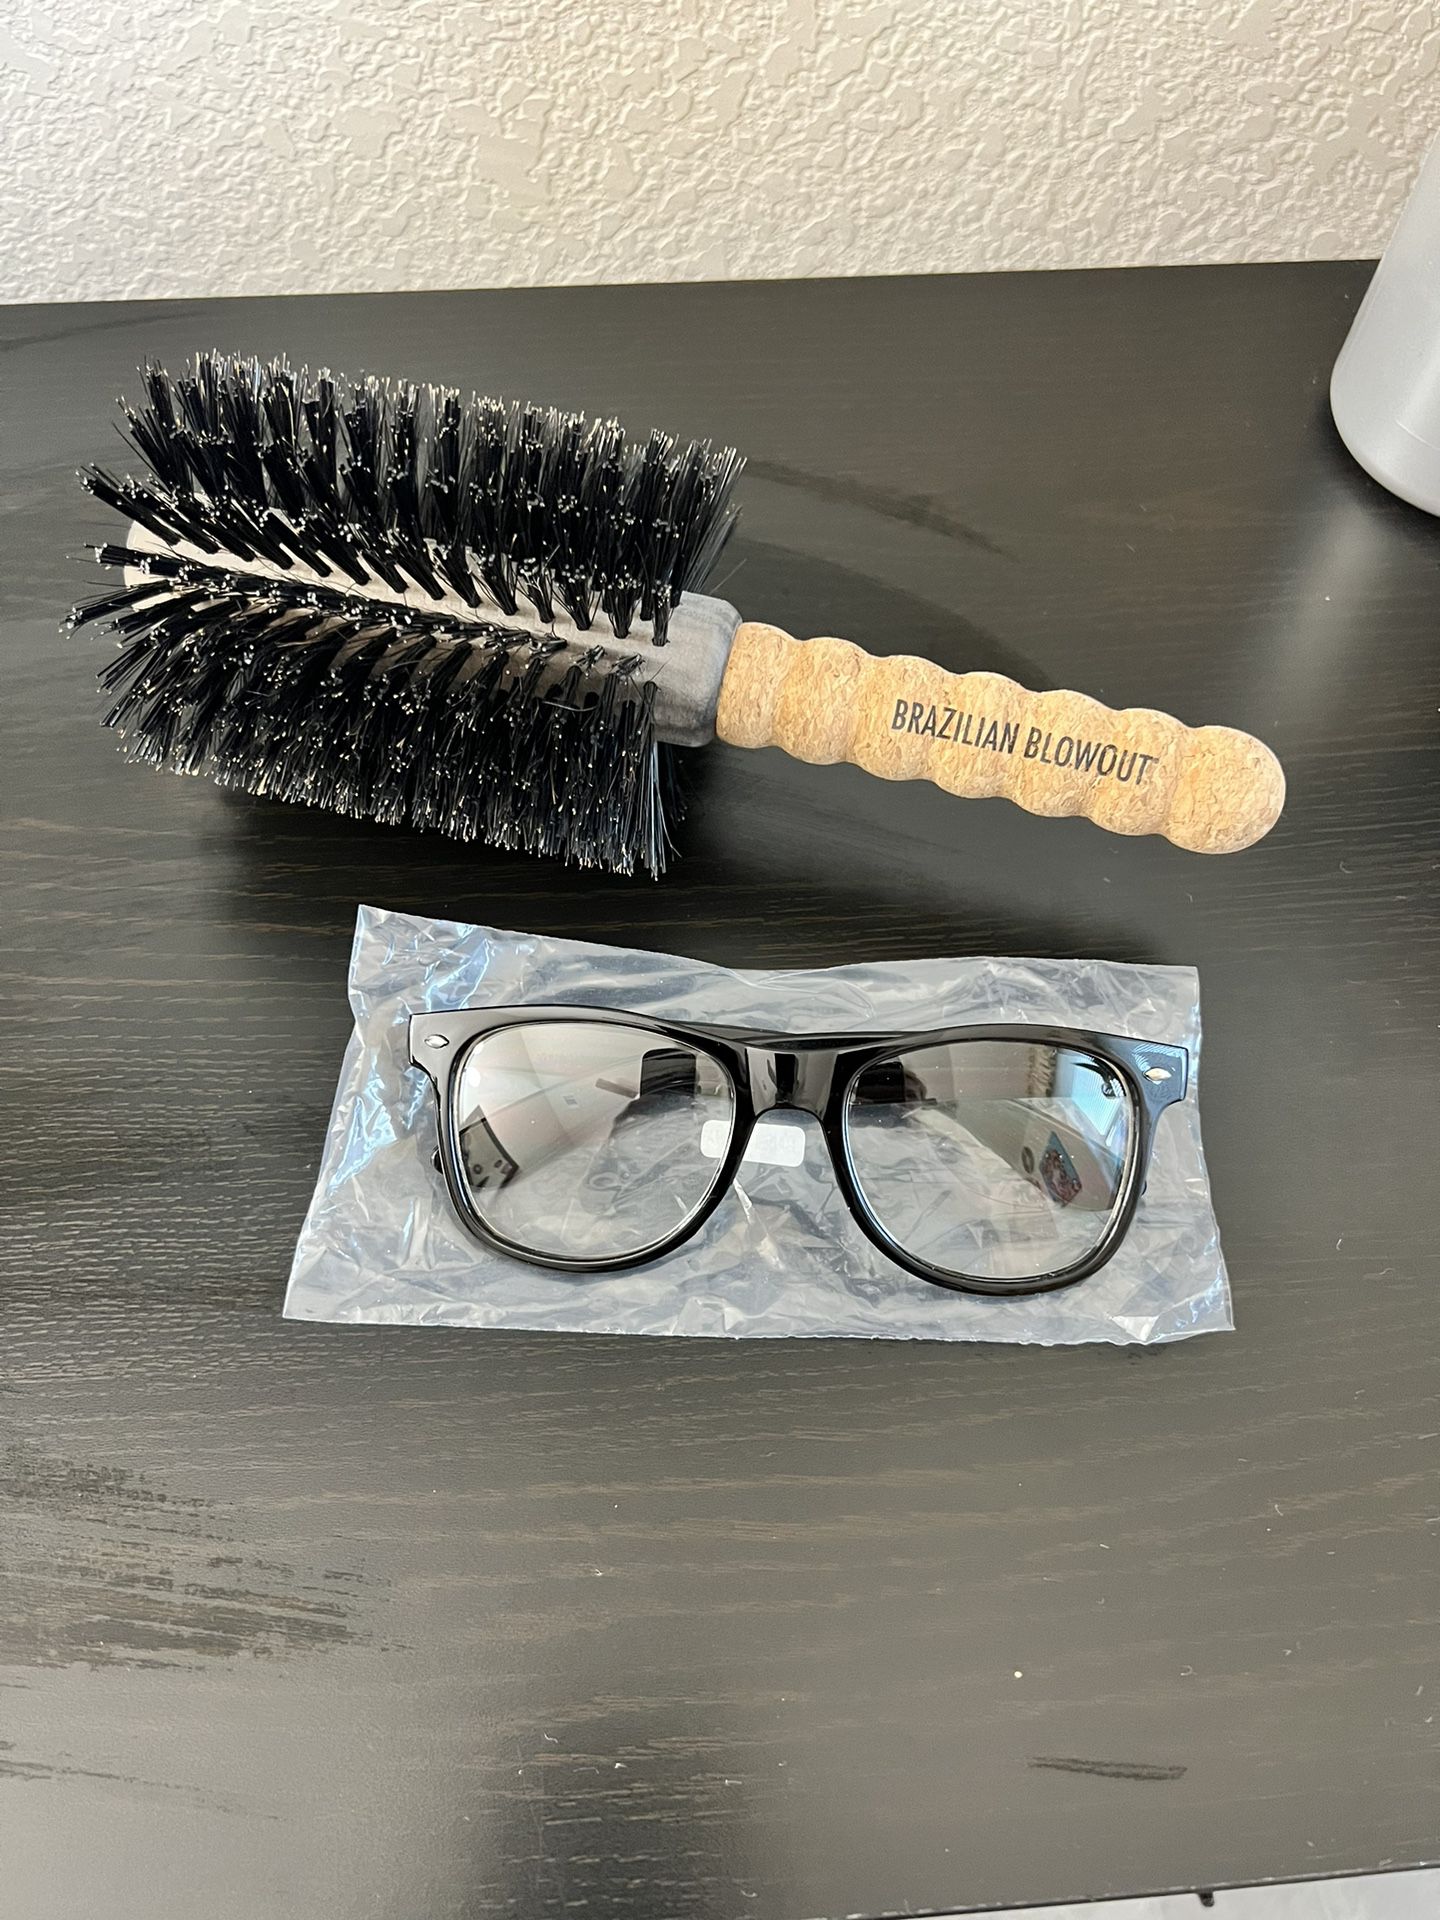 Brazilian Blowout round boar Bristle Brush 3,5”  and protective glasses  